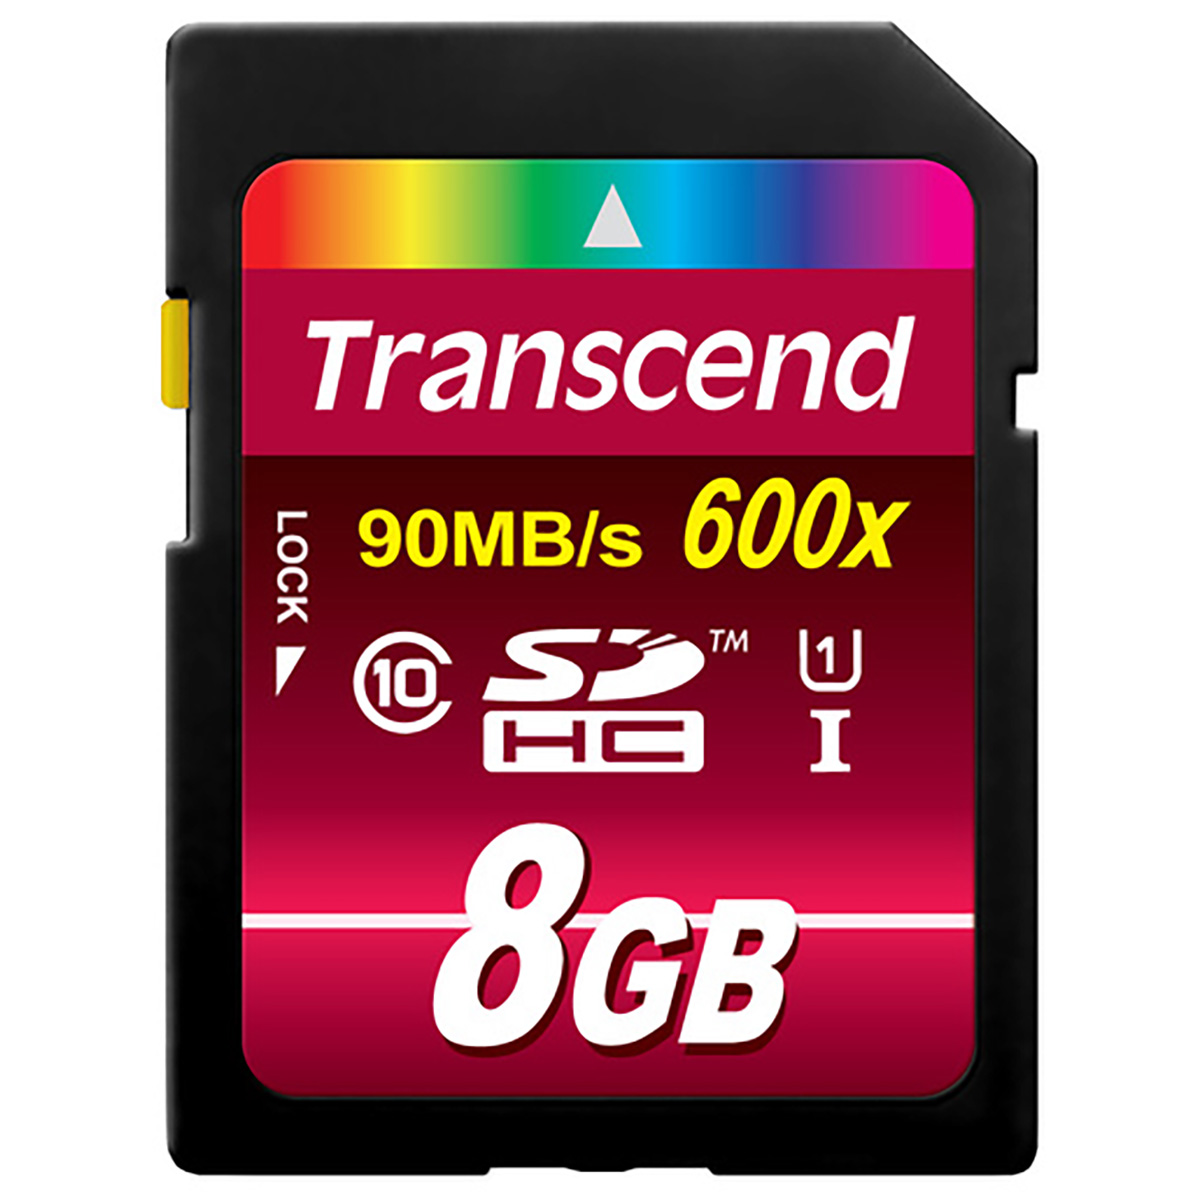 Transcend 8 GB SDHC CL10 UHS-1 600x